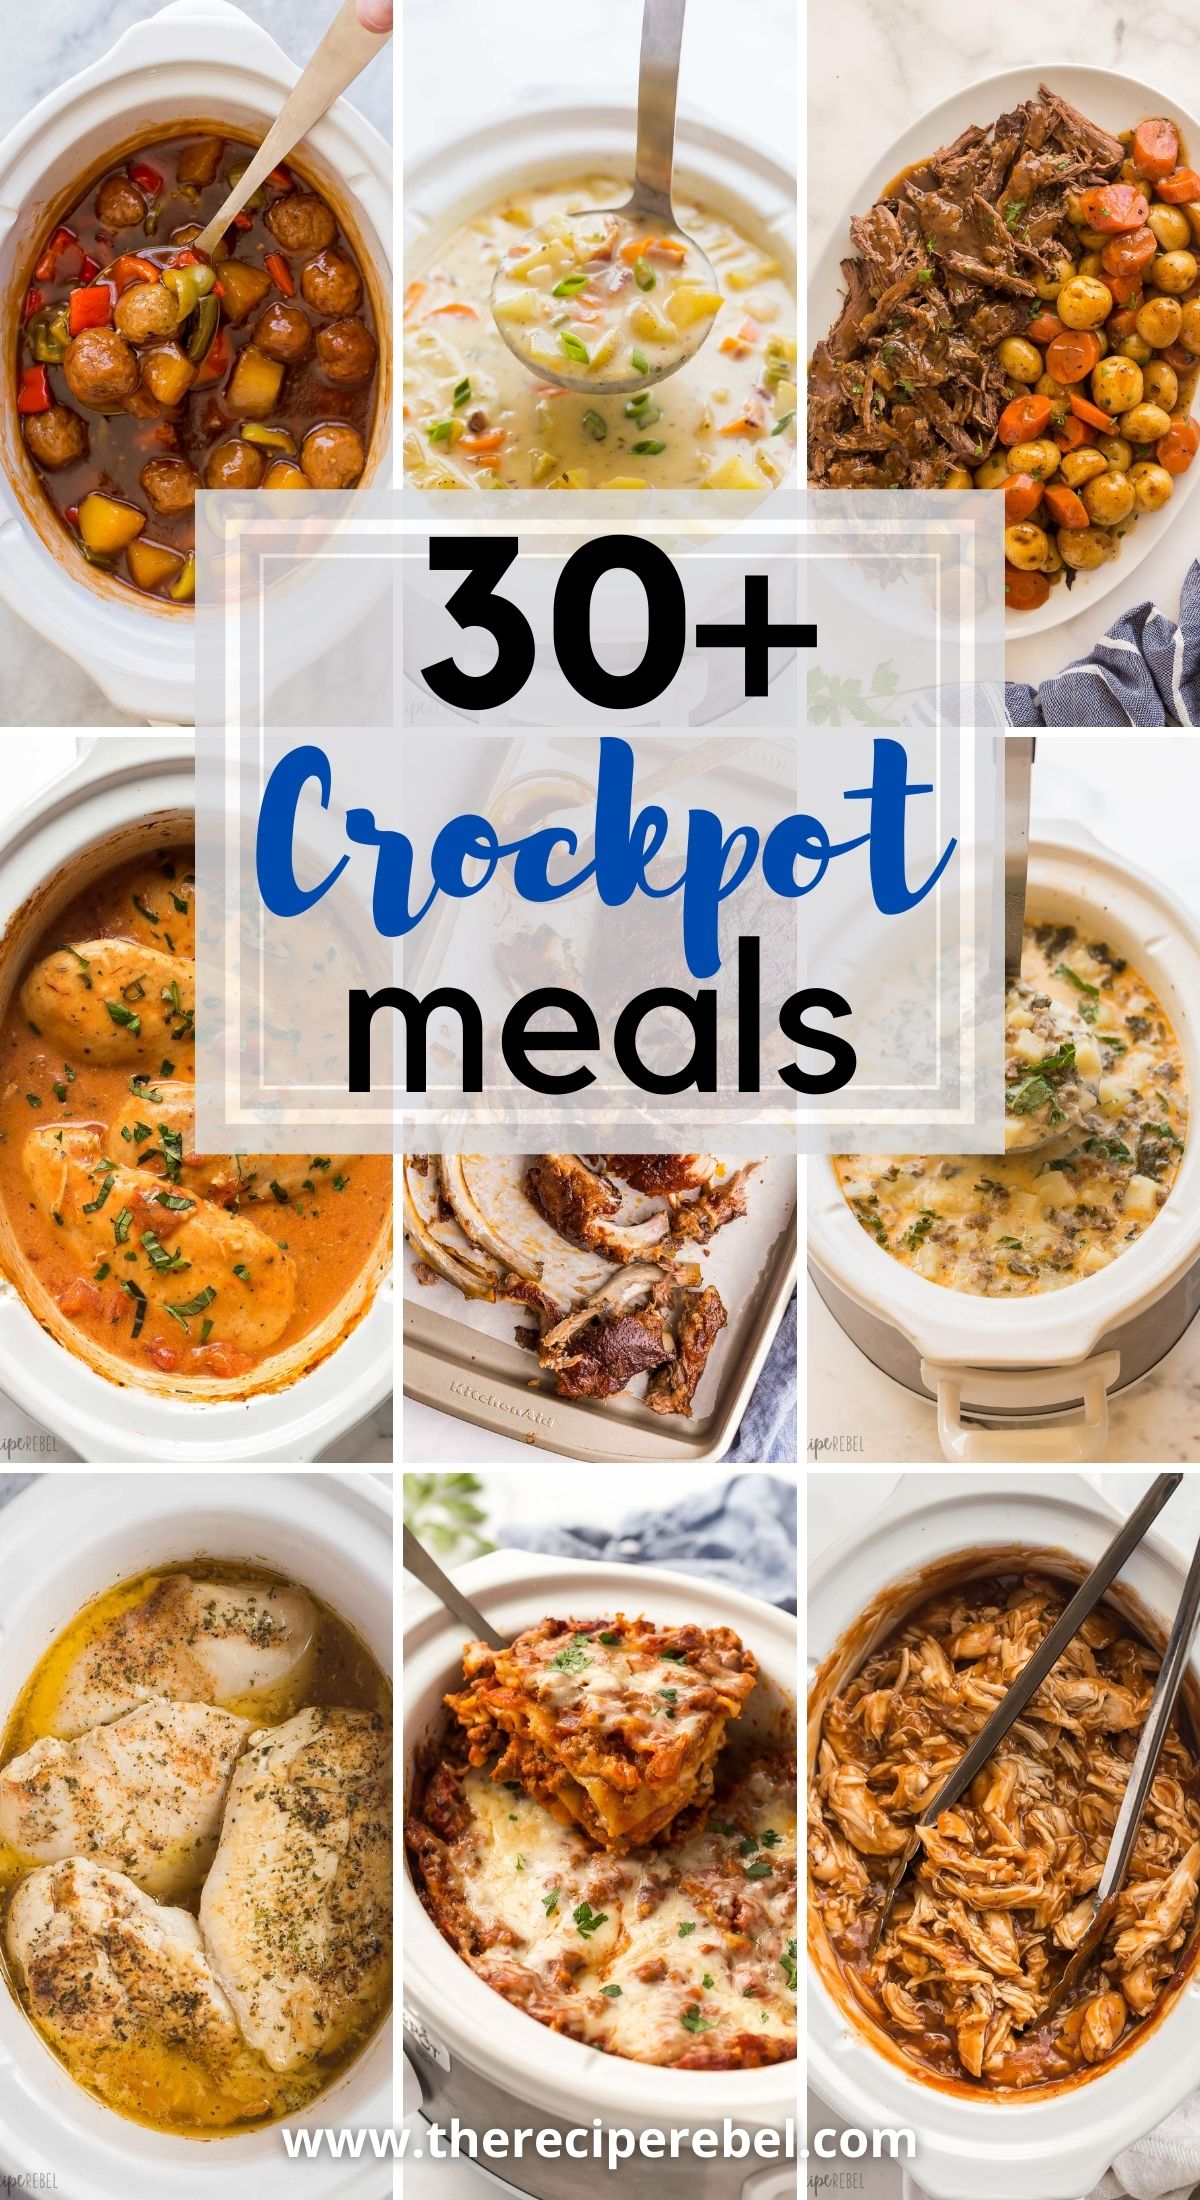 https://www.thereciperebel.com/wp-content/uploads/2018/04/easy-crockpot-meals-www.thereciperebel.com-pin.jpg